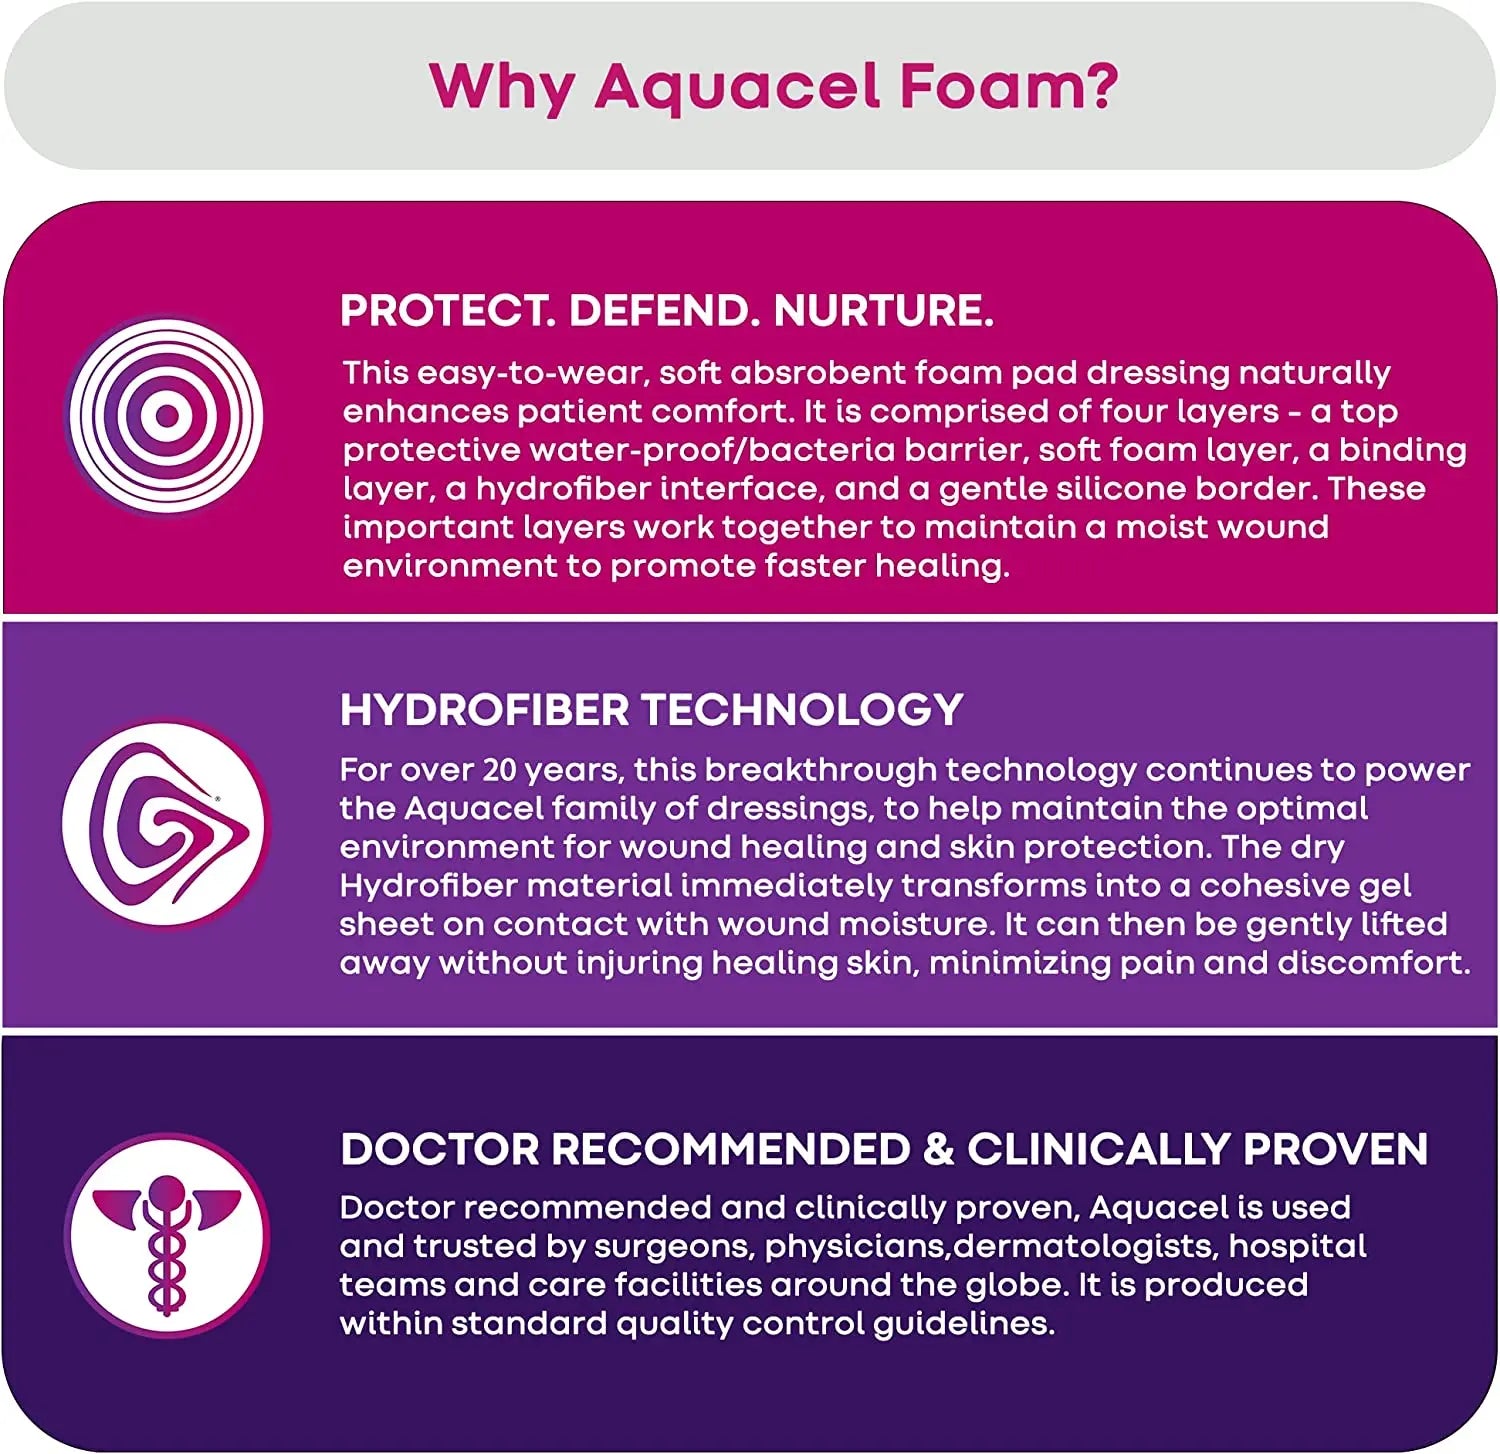 Aquacel Ag Foam Non-Adhesive 15cm X 20cm - Box Of 5 - Home Health Store Inc